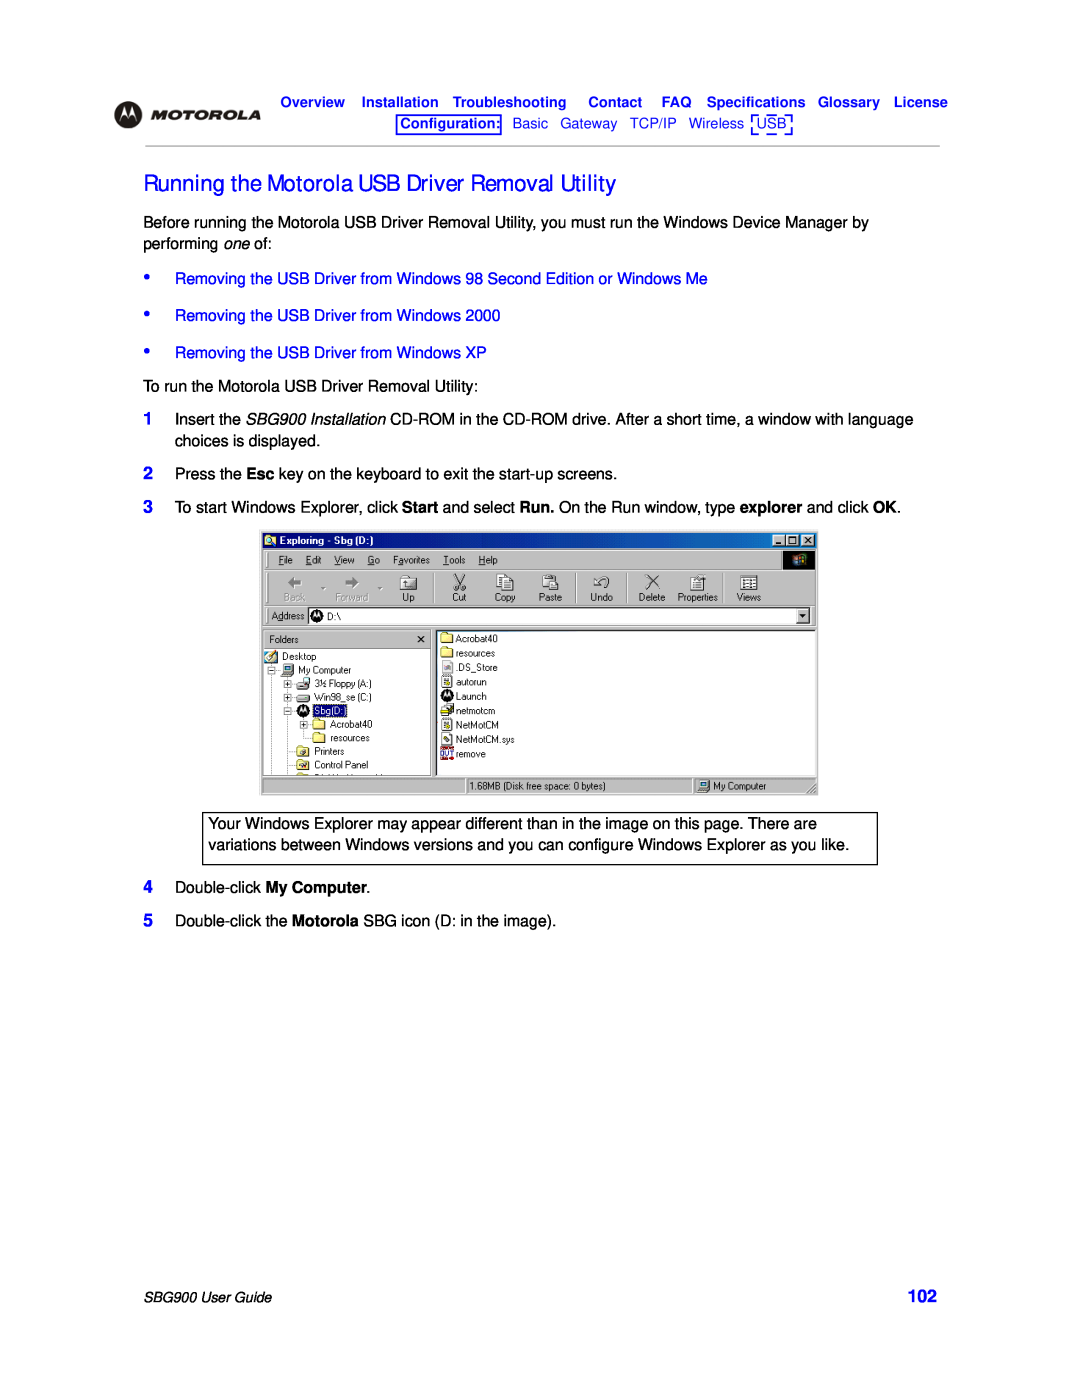 Motorola SBG900 manual Running the Motorola USB Driver Removal Utility, Removing the USB Driver from Windows 